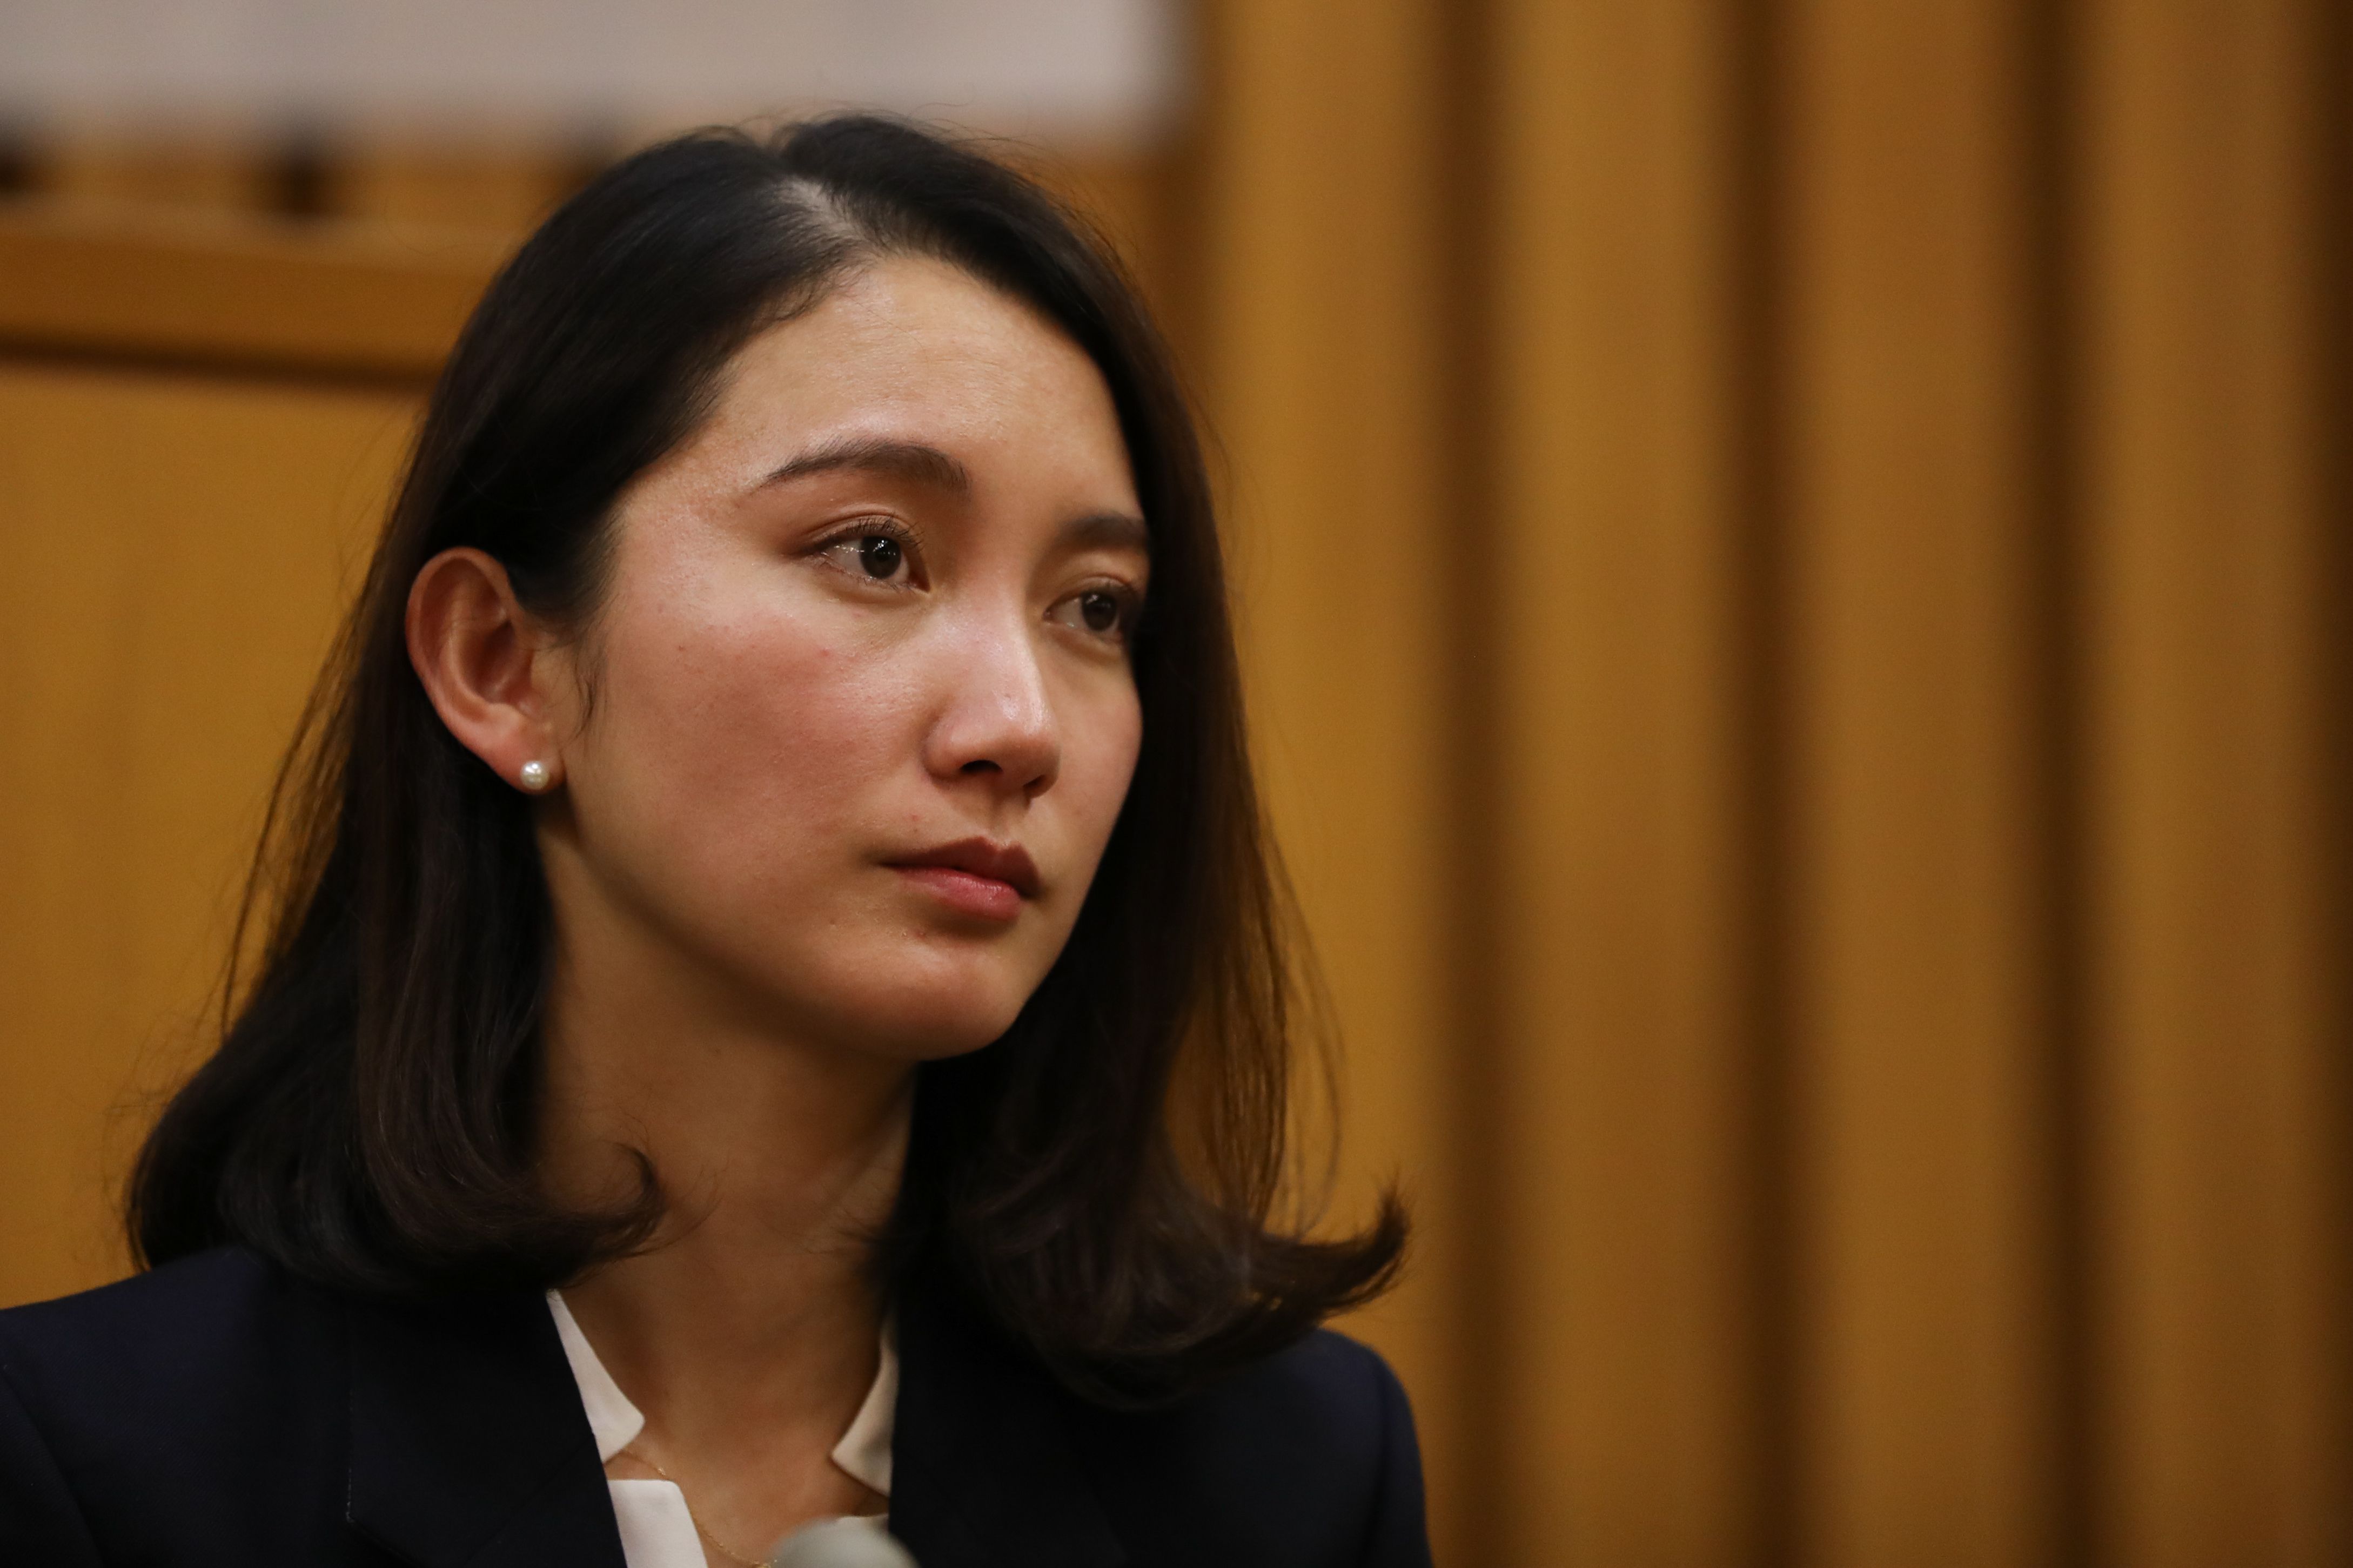 Force Jabardasti Xxx Video - She won a civil case against her alleged rapist. But Japan's rape laws need  an overhaul, campaigners say | CNN